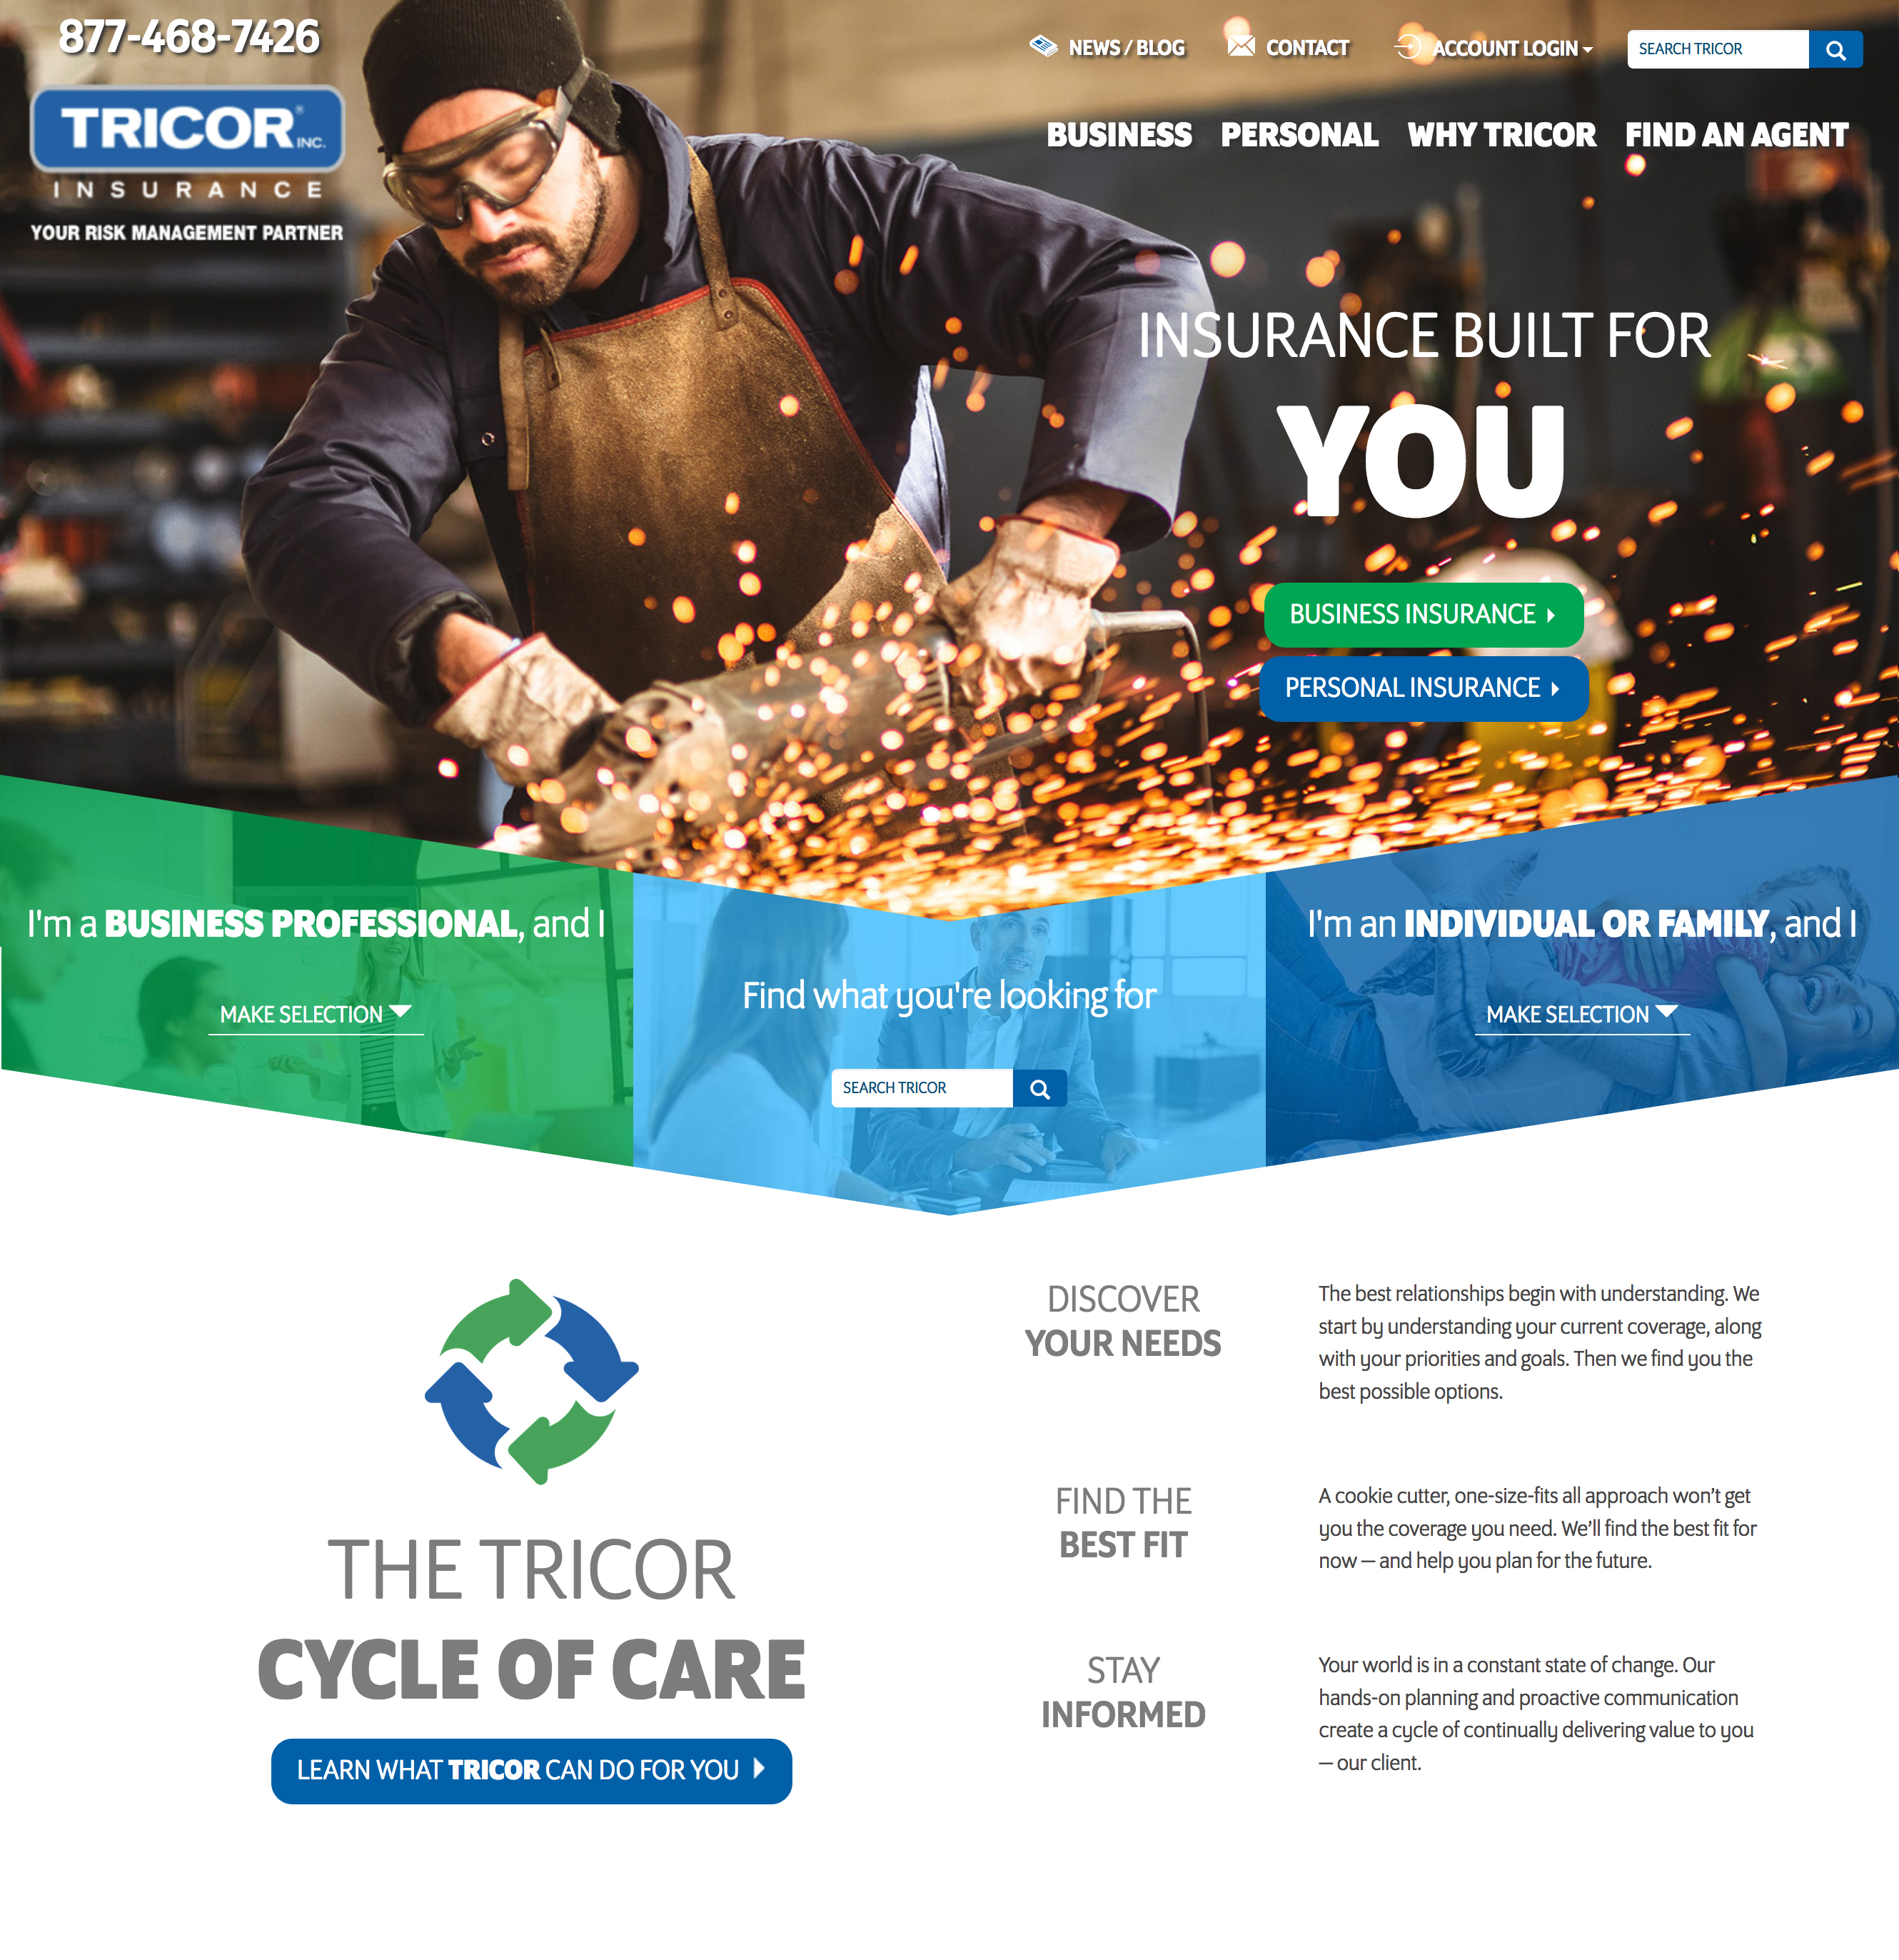 TRICOR Insurance image